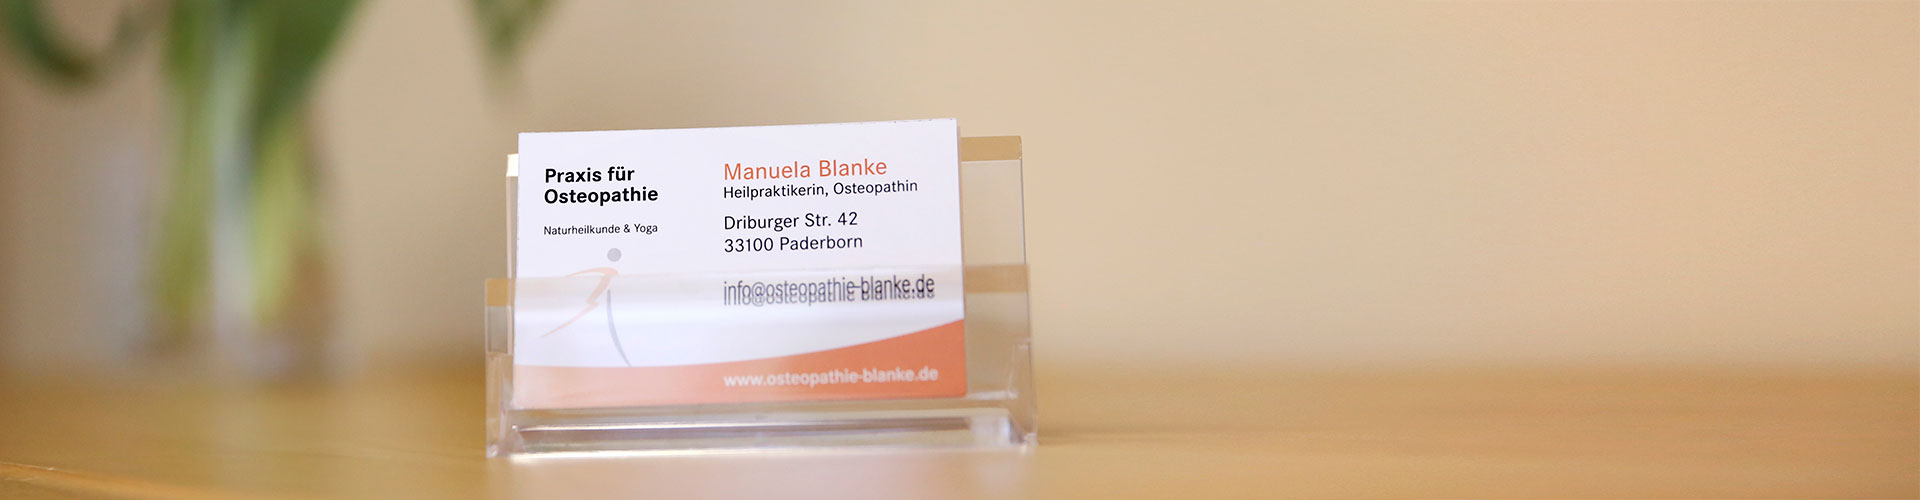 Manuele Blanke - Osteopathie - Naturheilkunde - Yoga - Paderborn